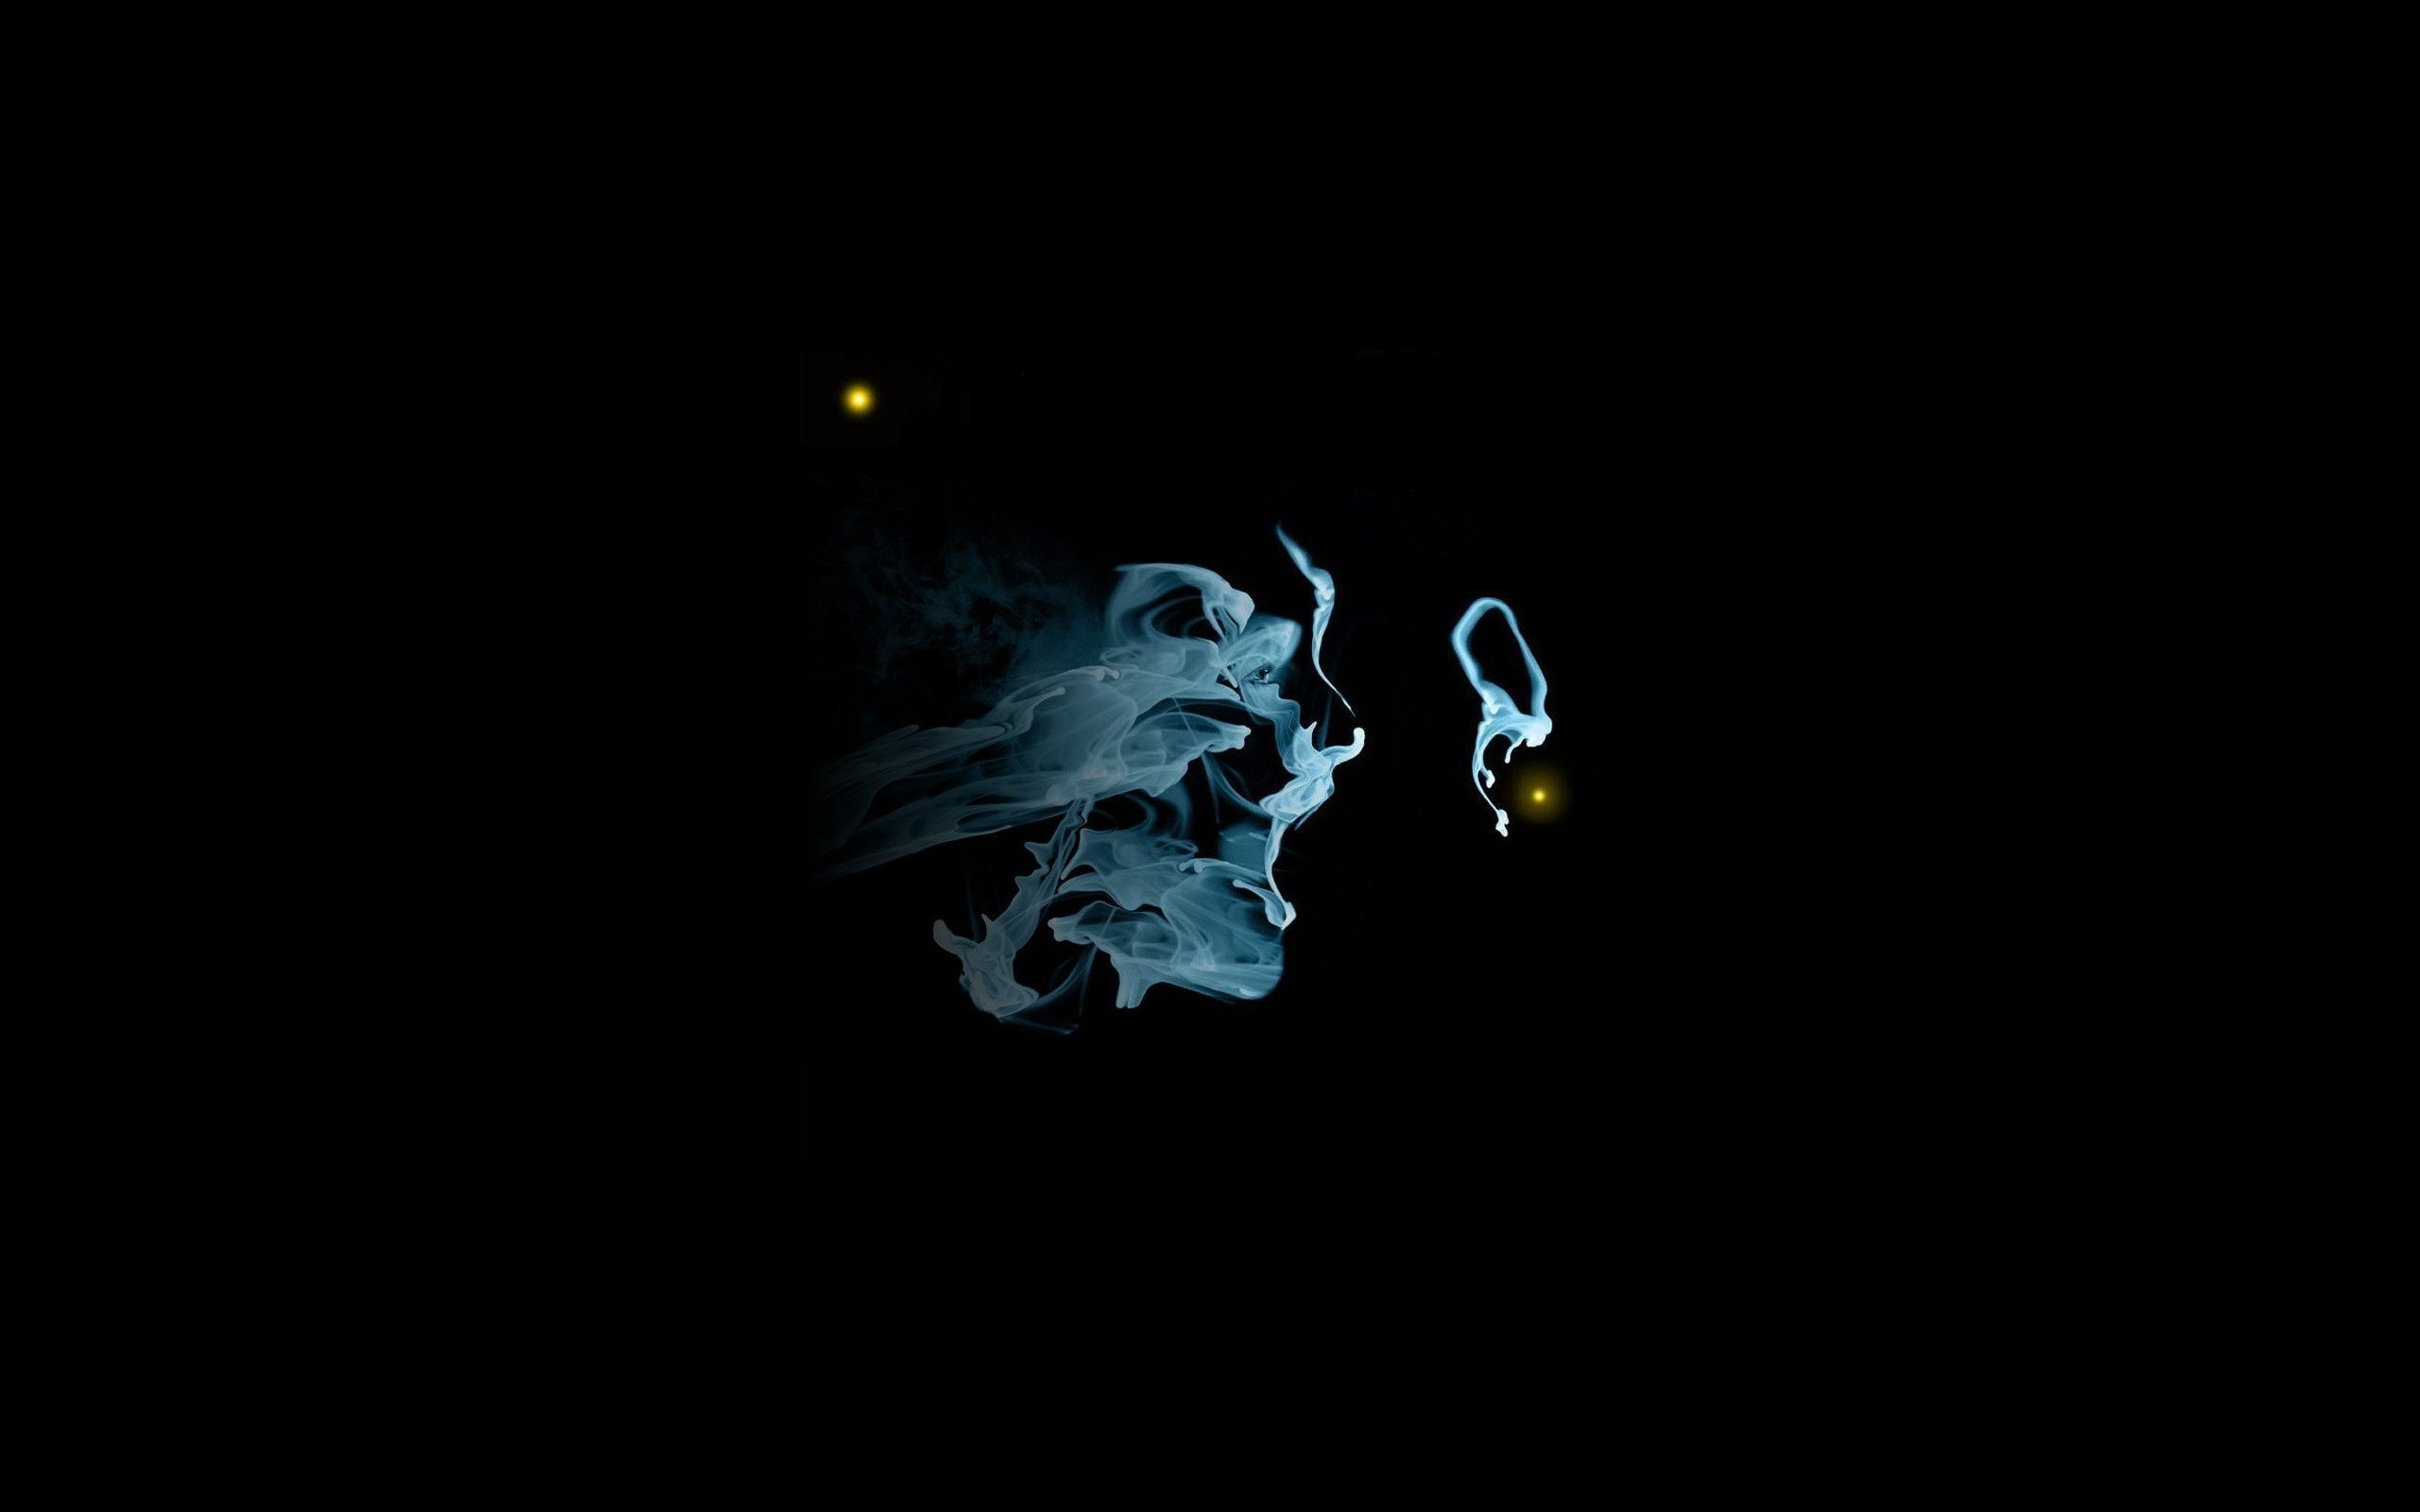 Fringe (TV series), Smoke, Black, Dark Wallpaper